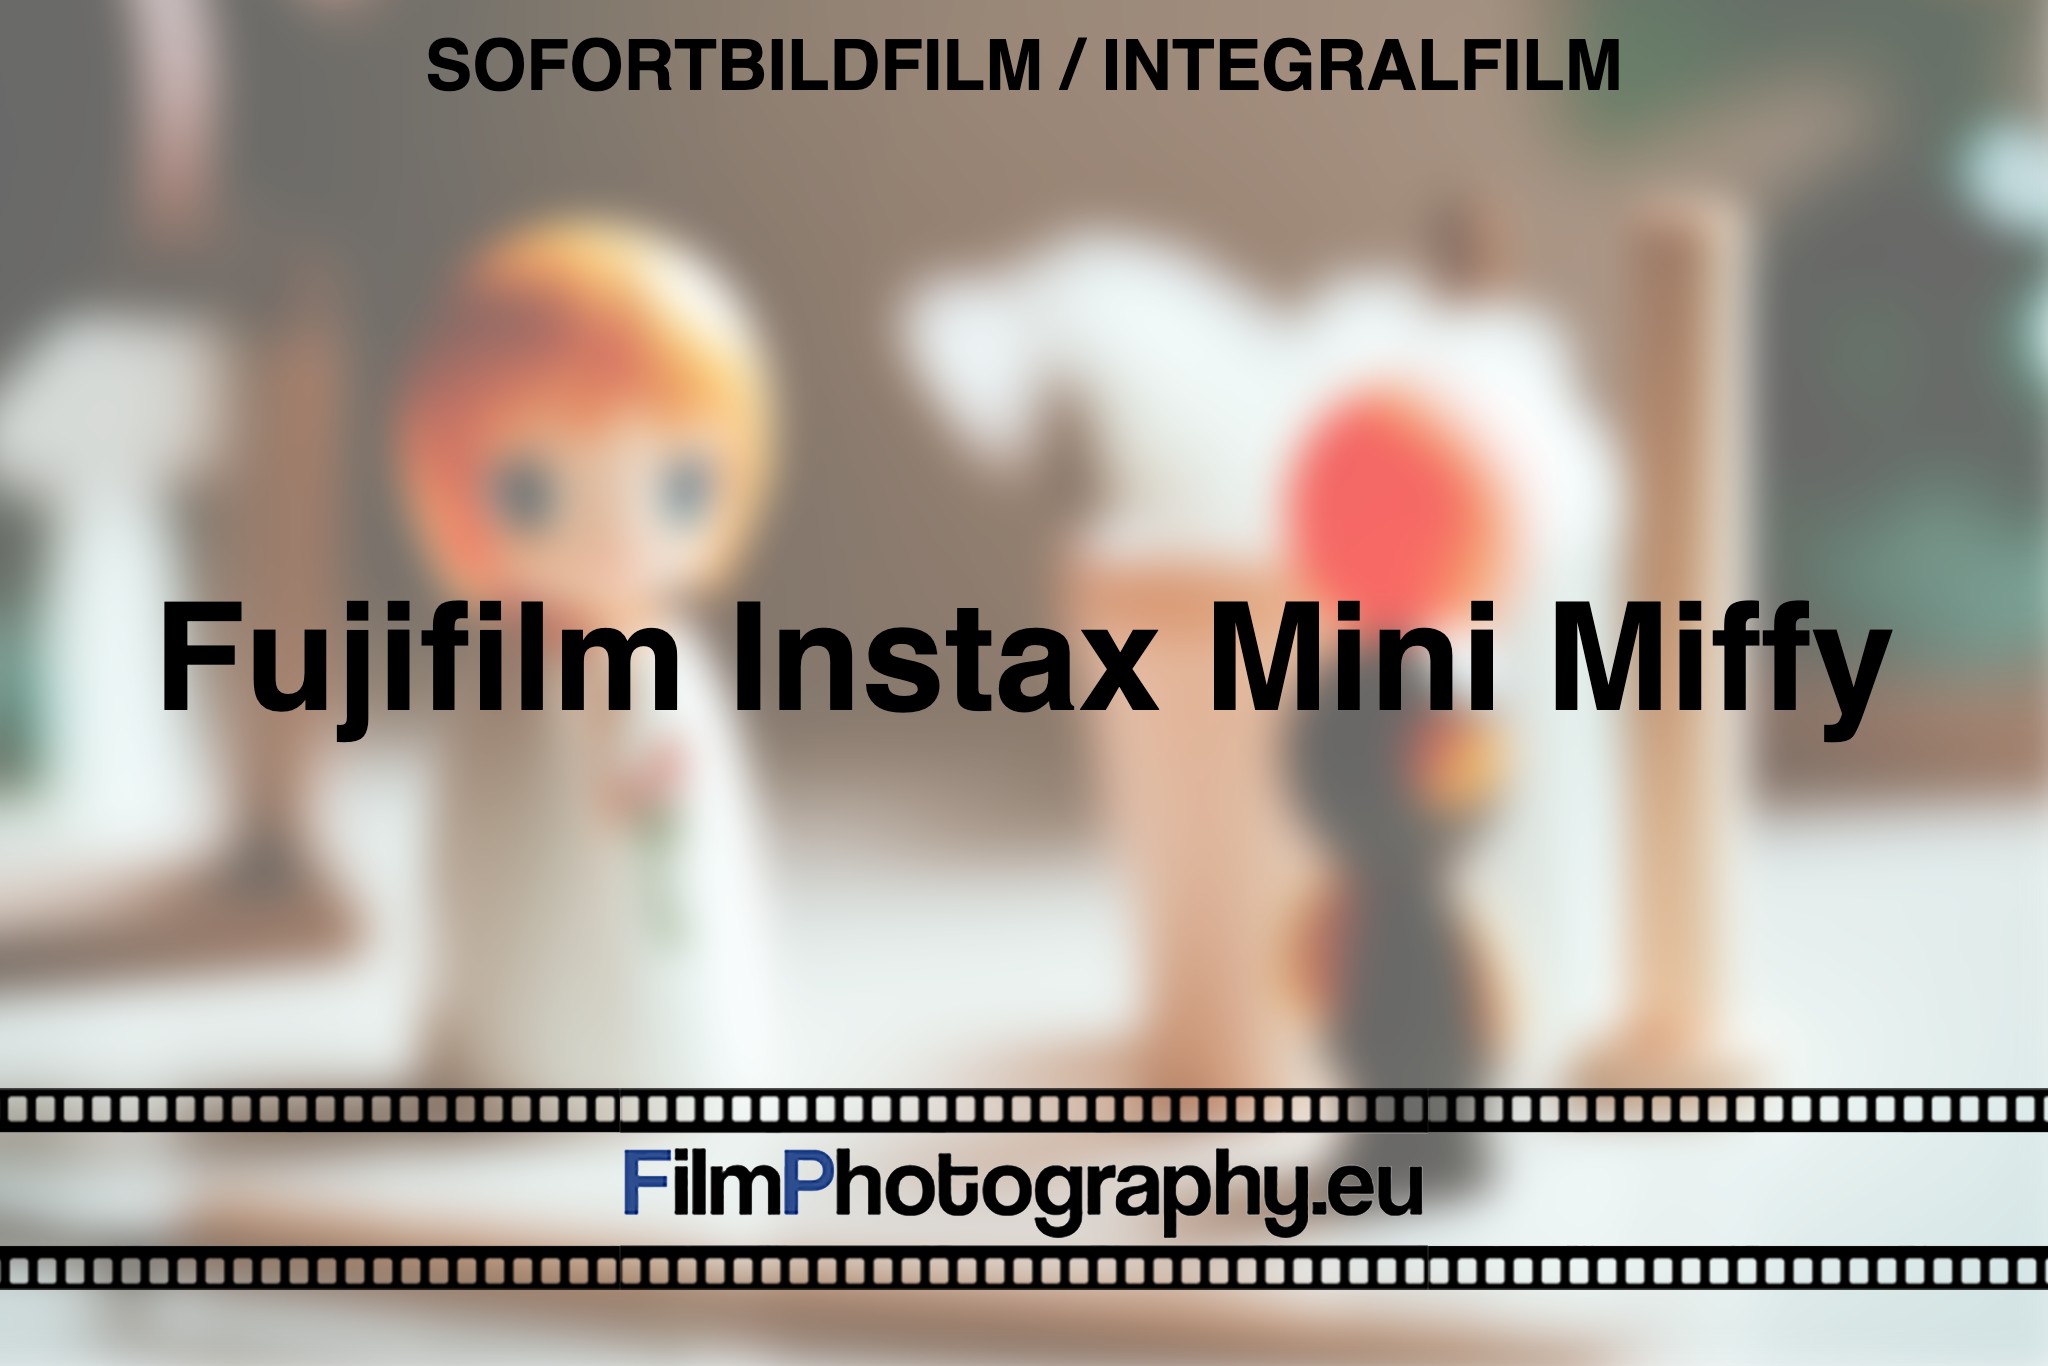 fujifilm-instax-mini-miffy-sofortbildfilm-integralfilm-fp-bnv